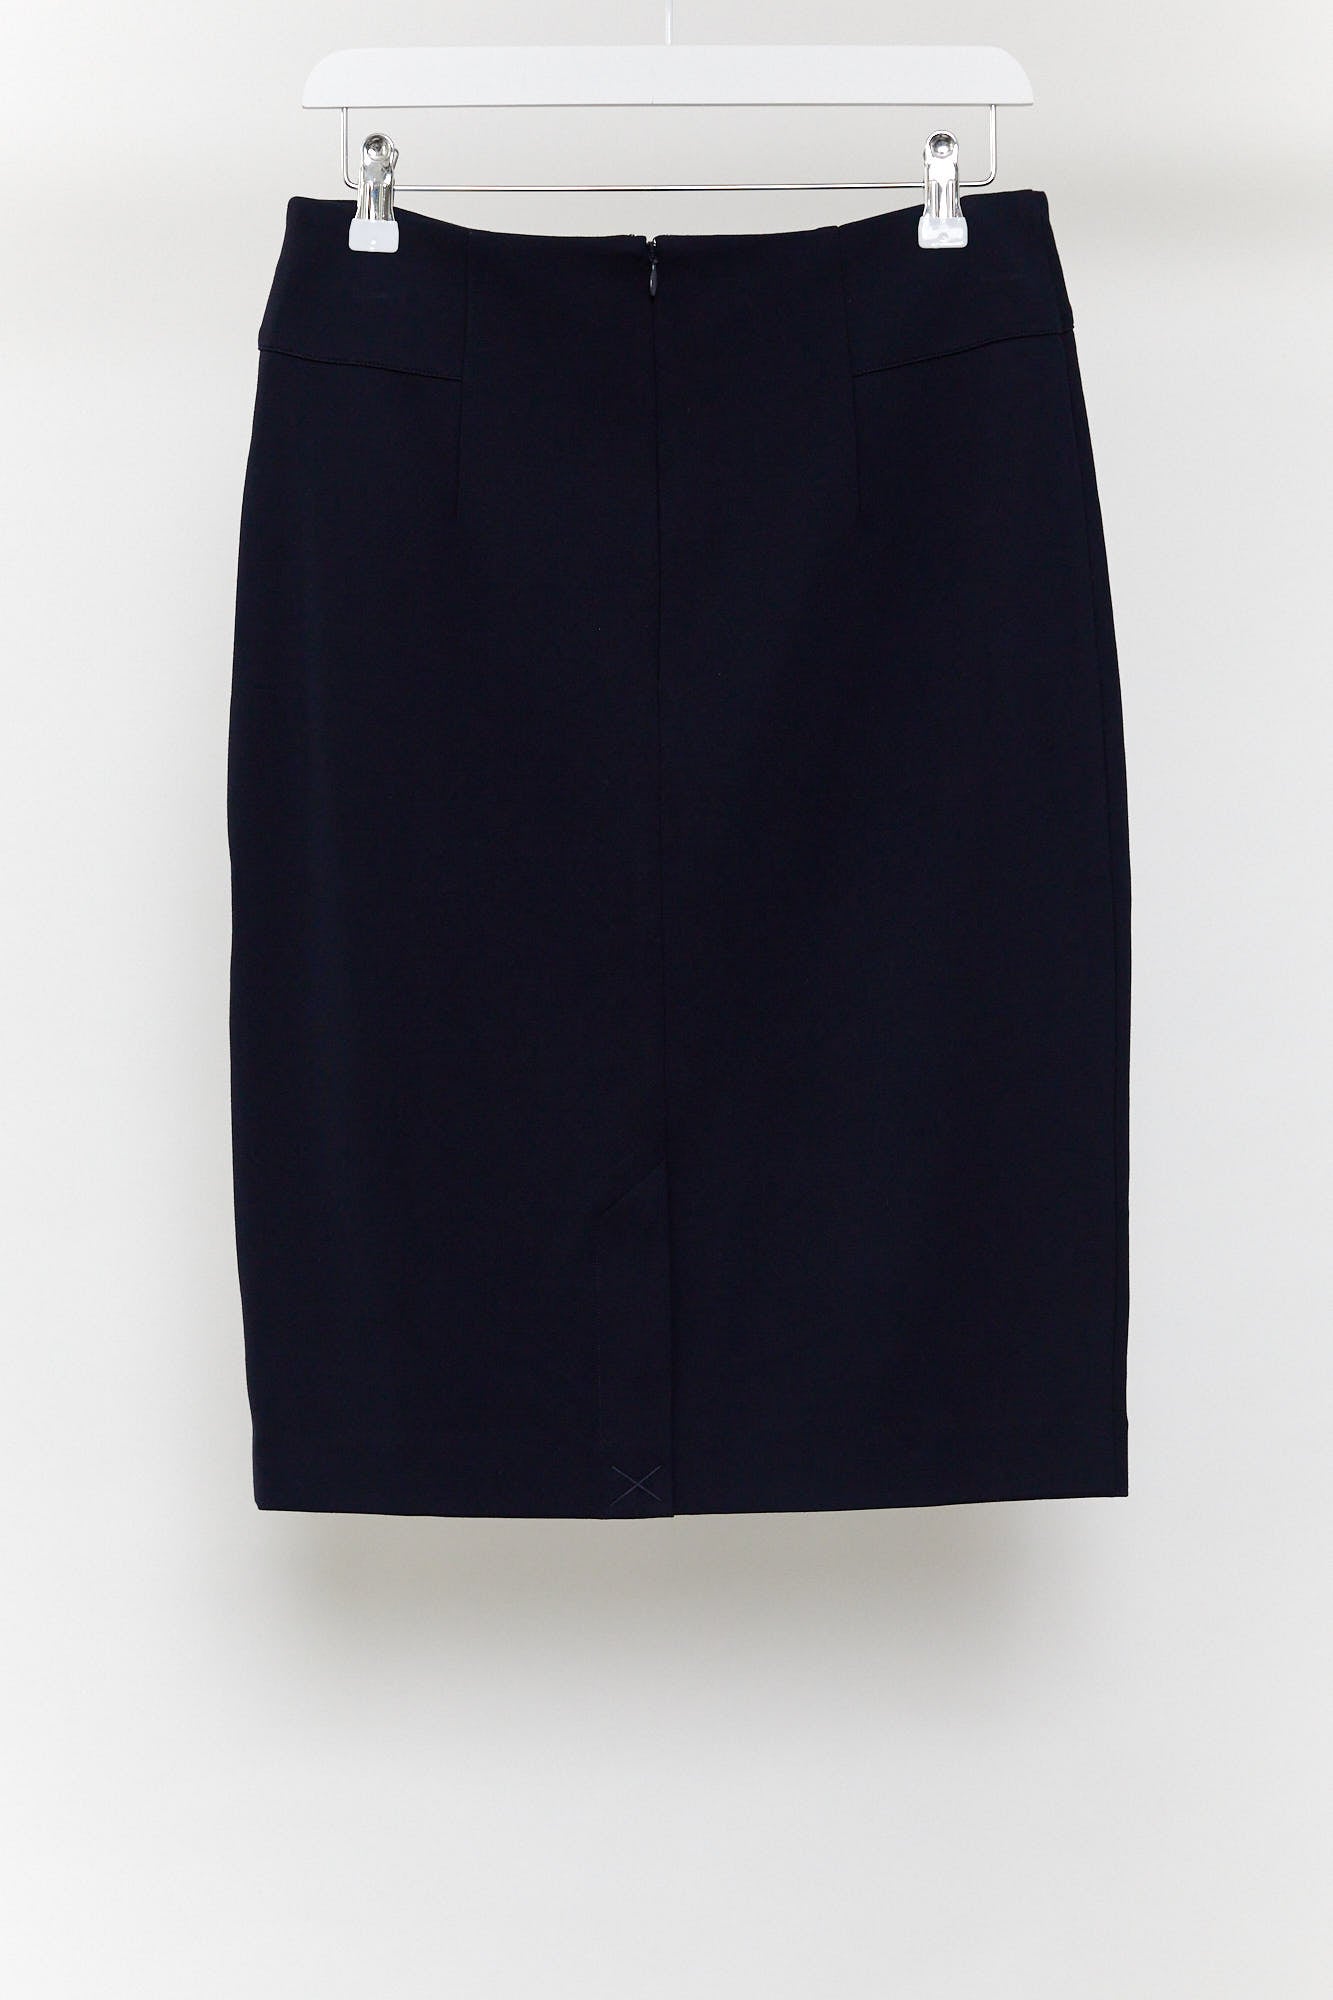 Womens John Lewis Navy pencil skirt size small